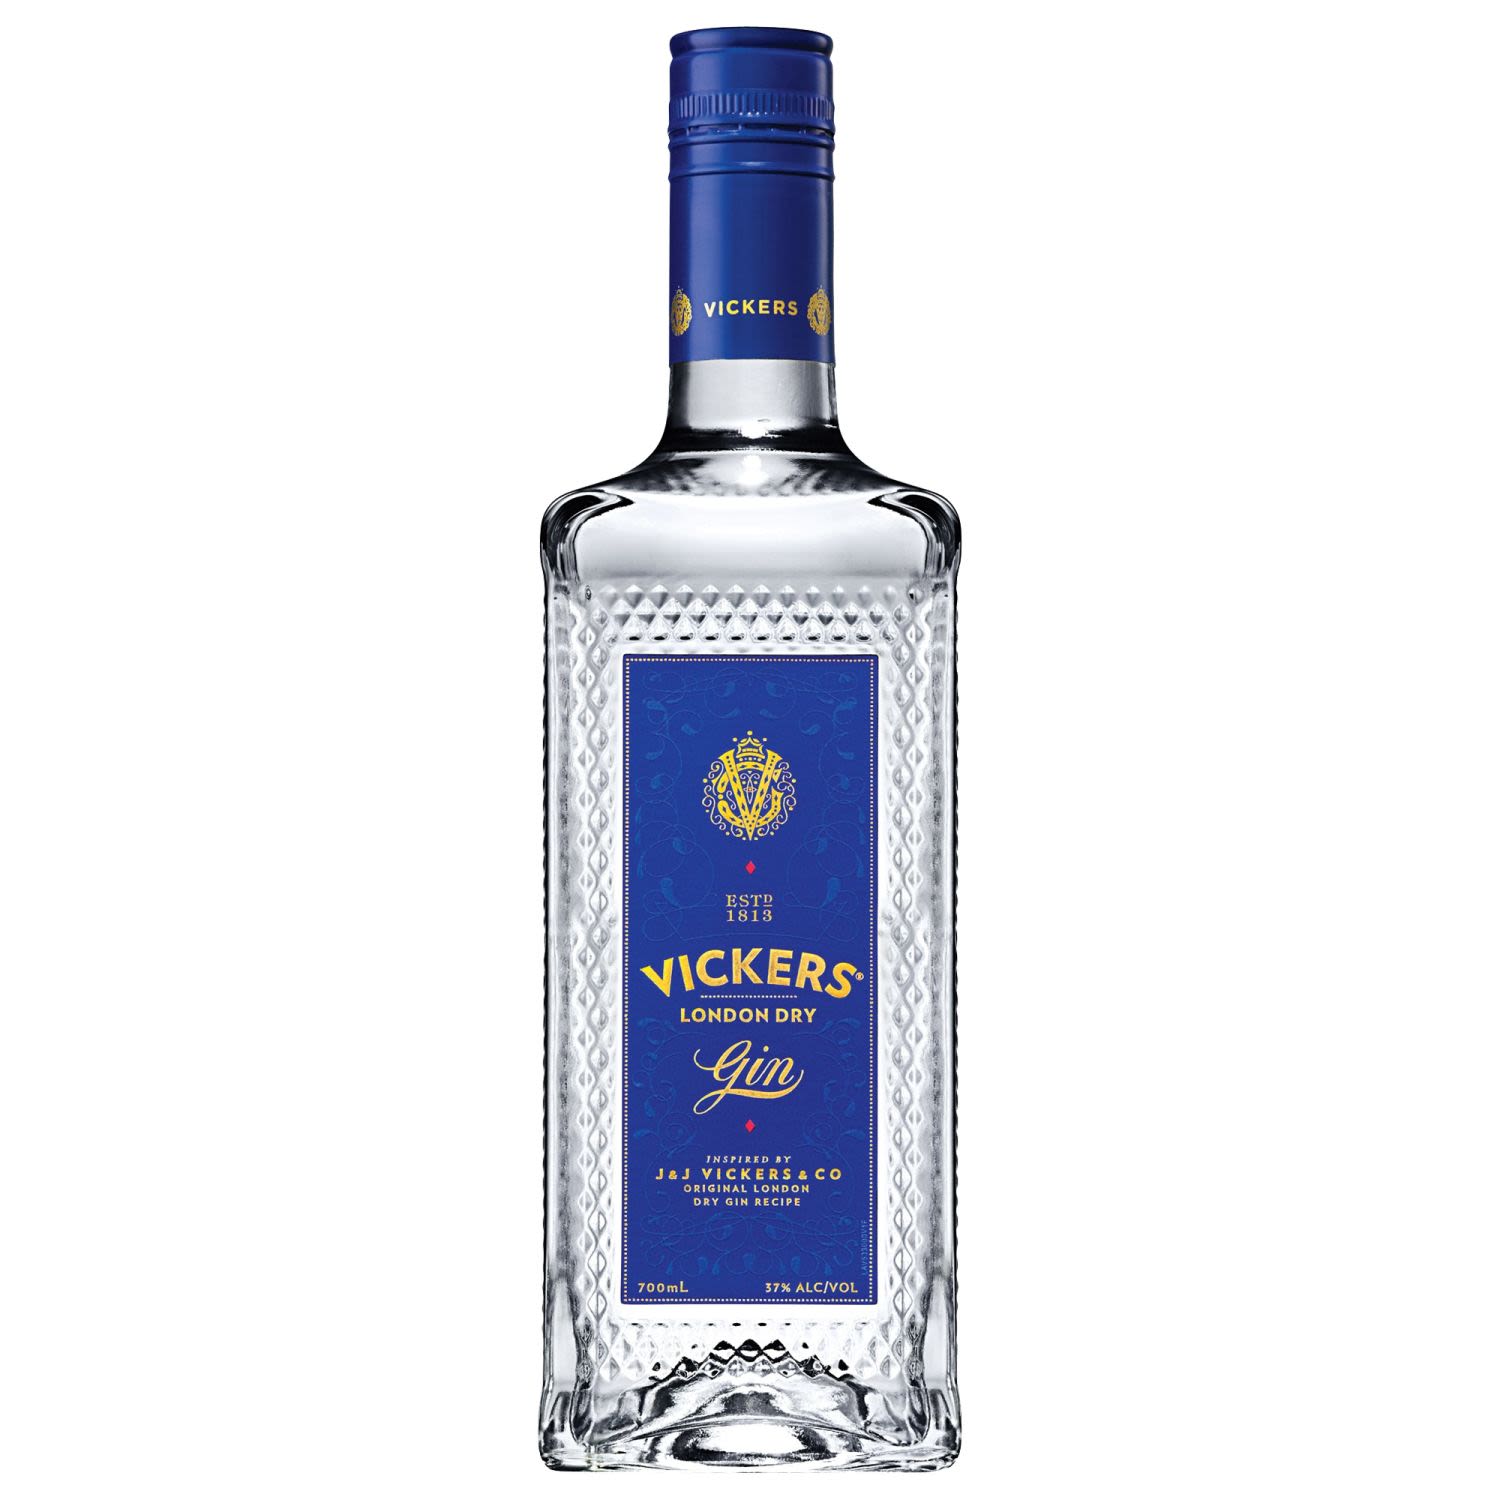 Vickers London Dry Gin 700mL Bottle